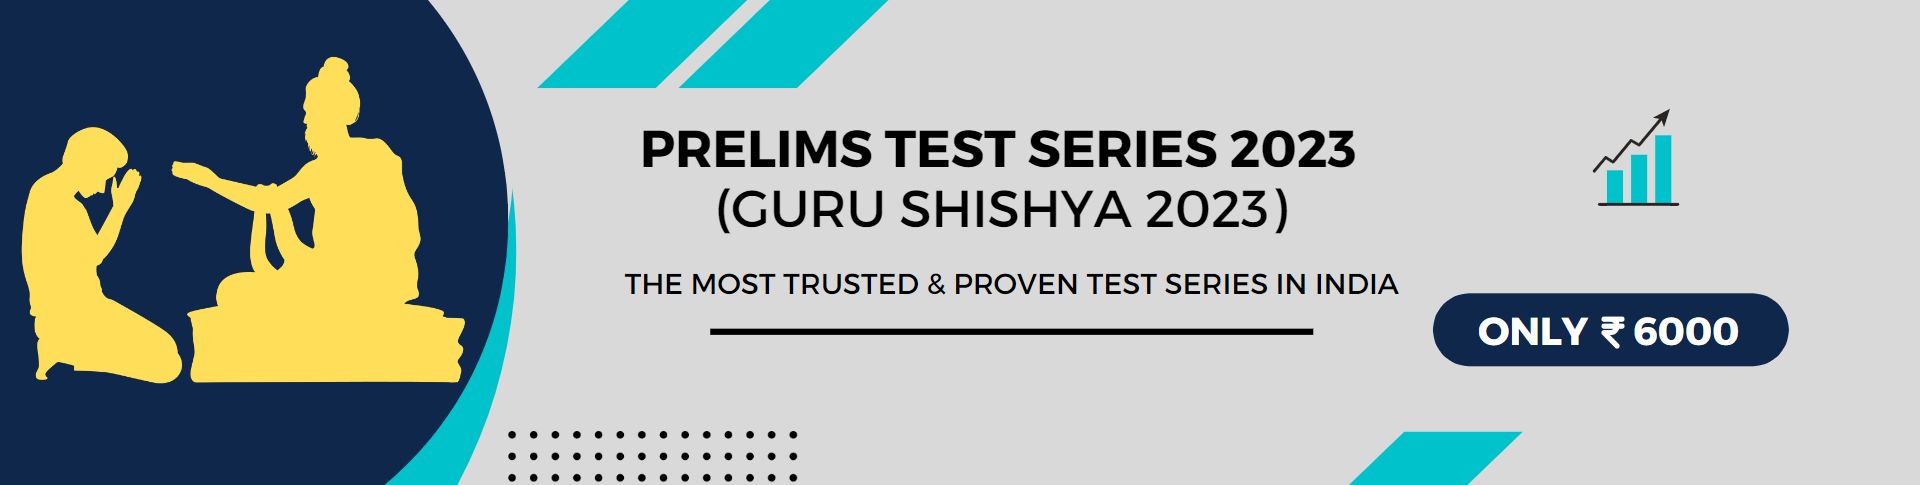 prelims-test-series-2023-guru-shisya